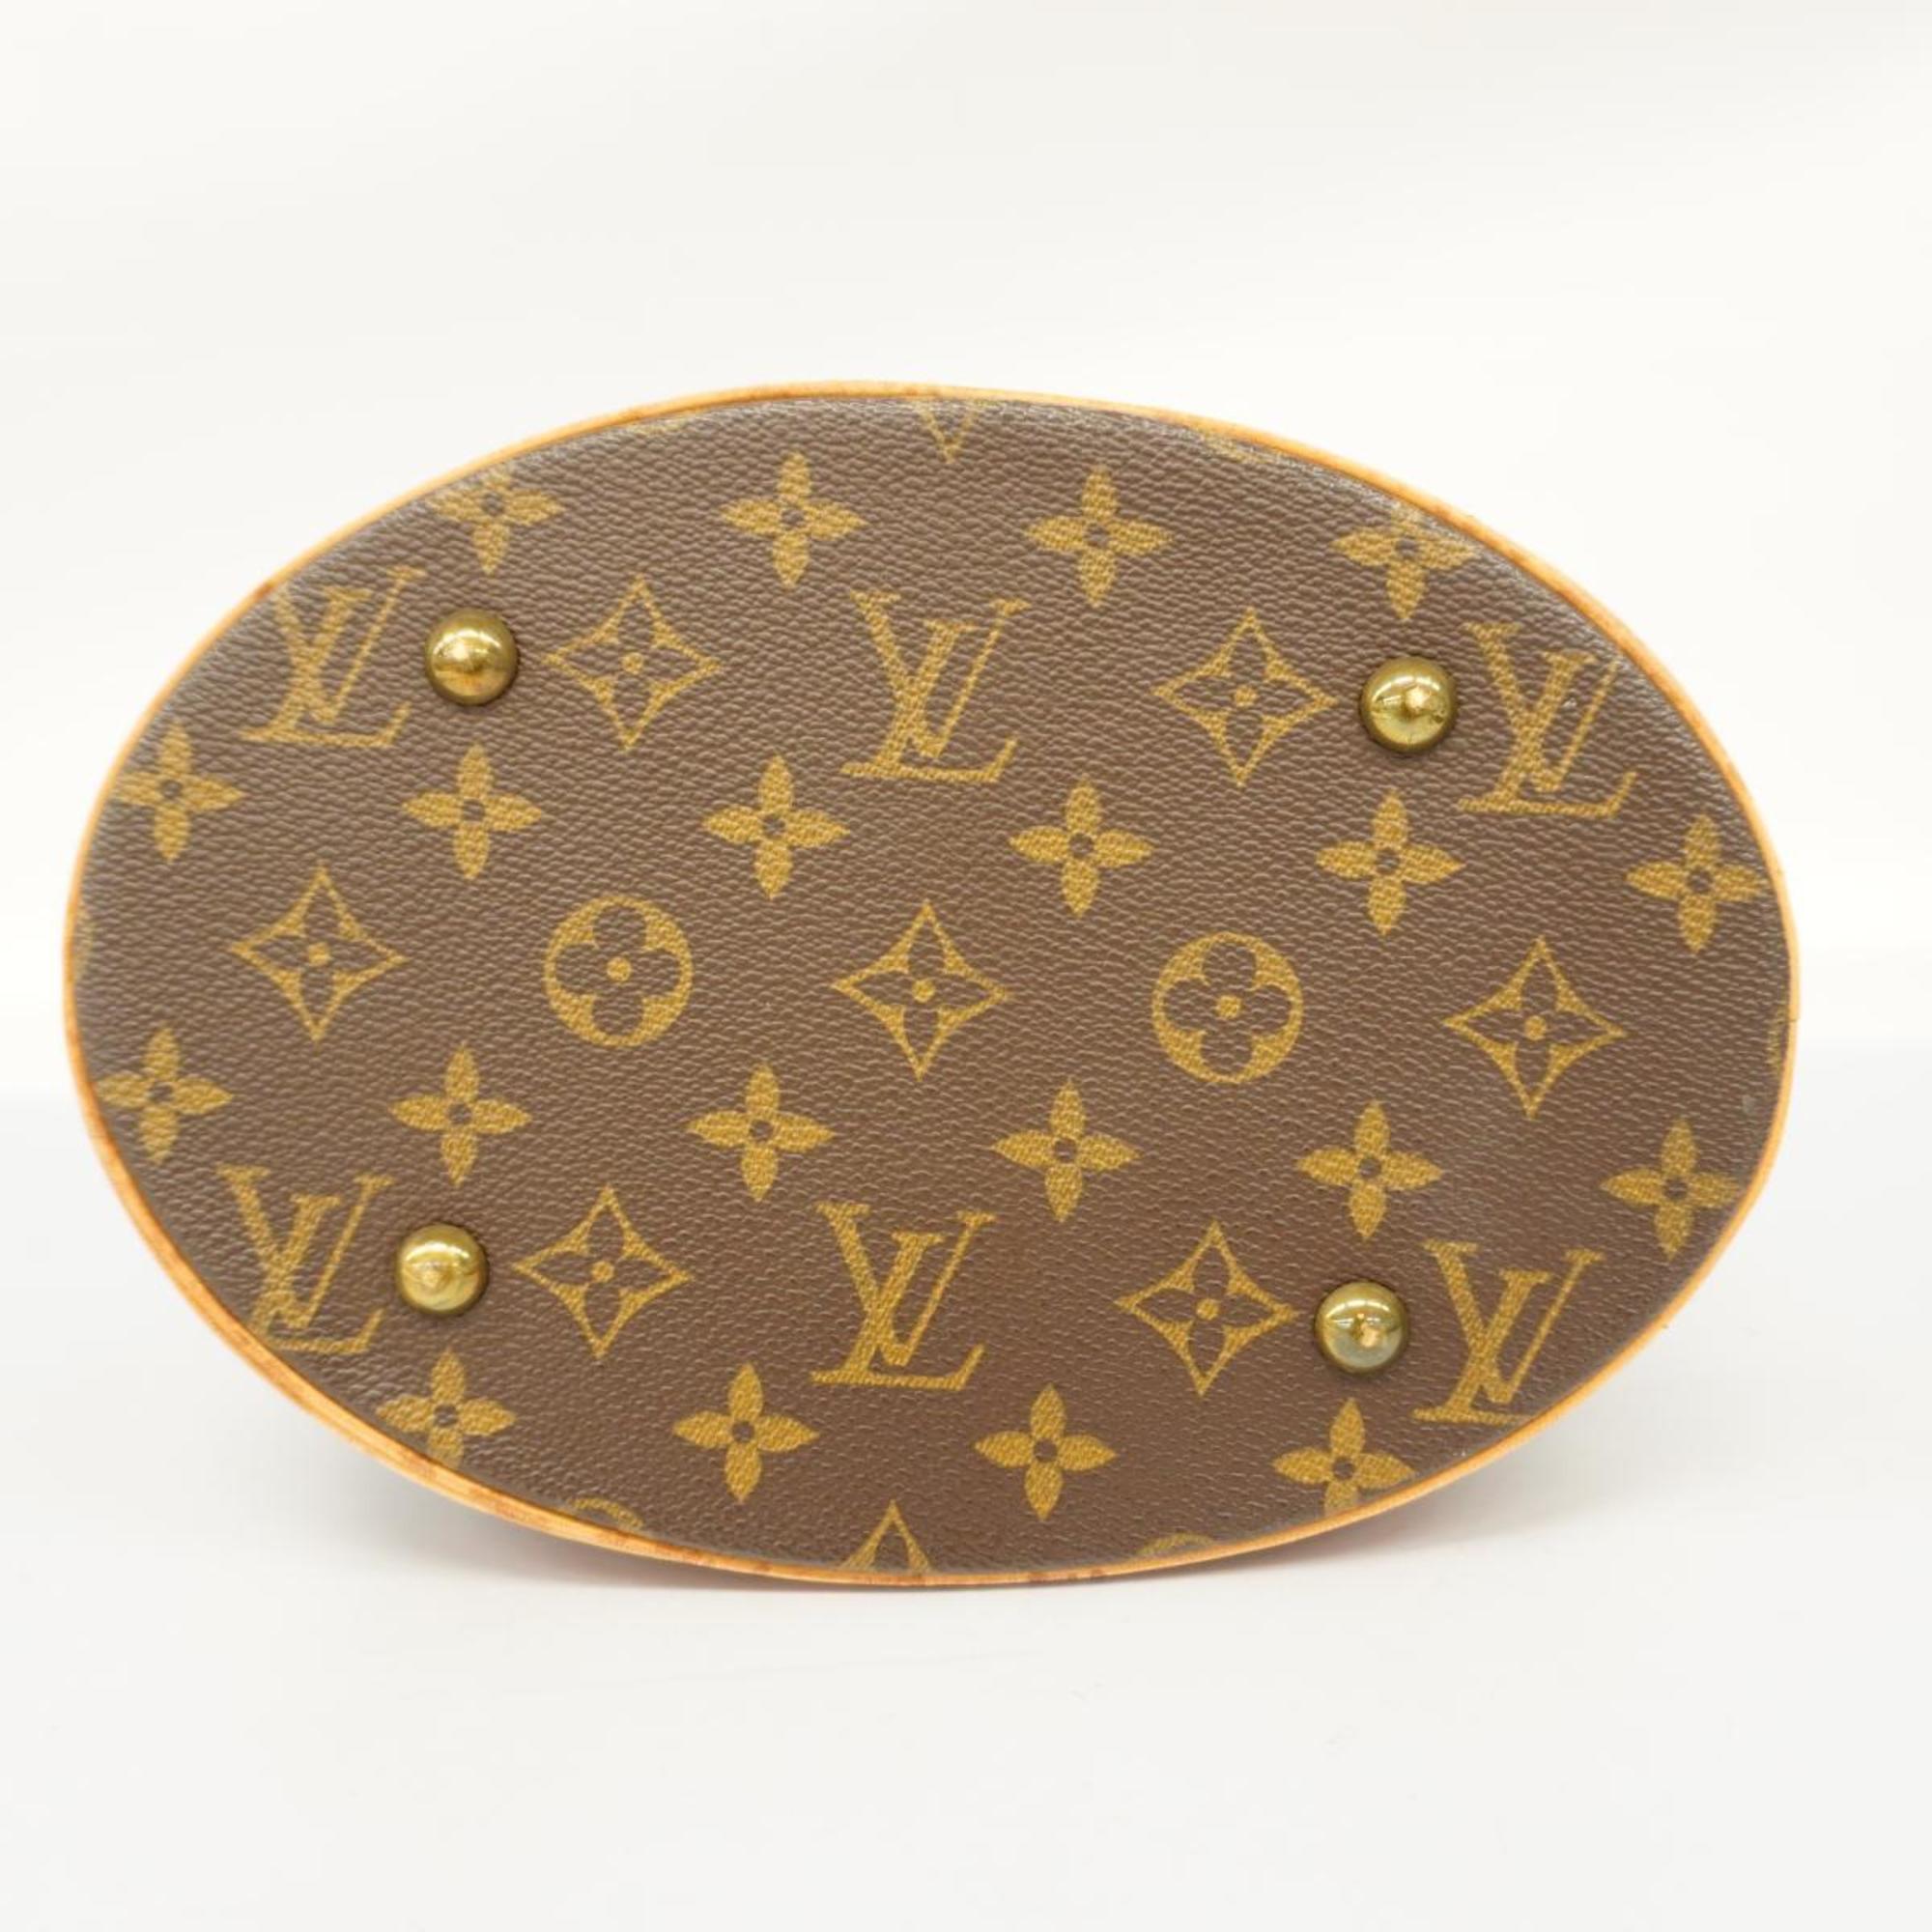 Louis Vuitton Tote Bag Monogram Petit Bucket PM M42238 Brown Women's